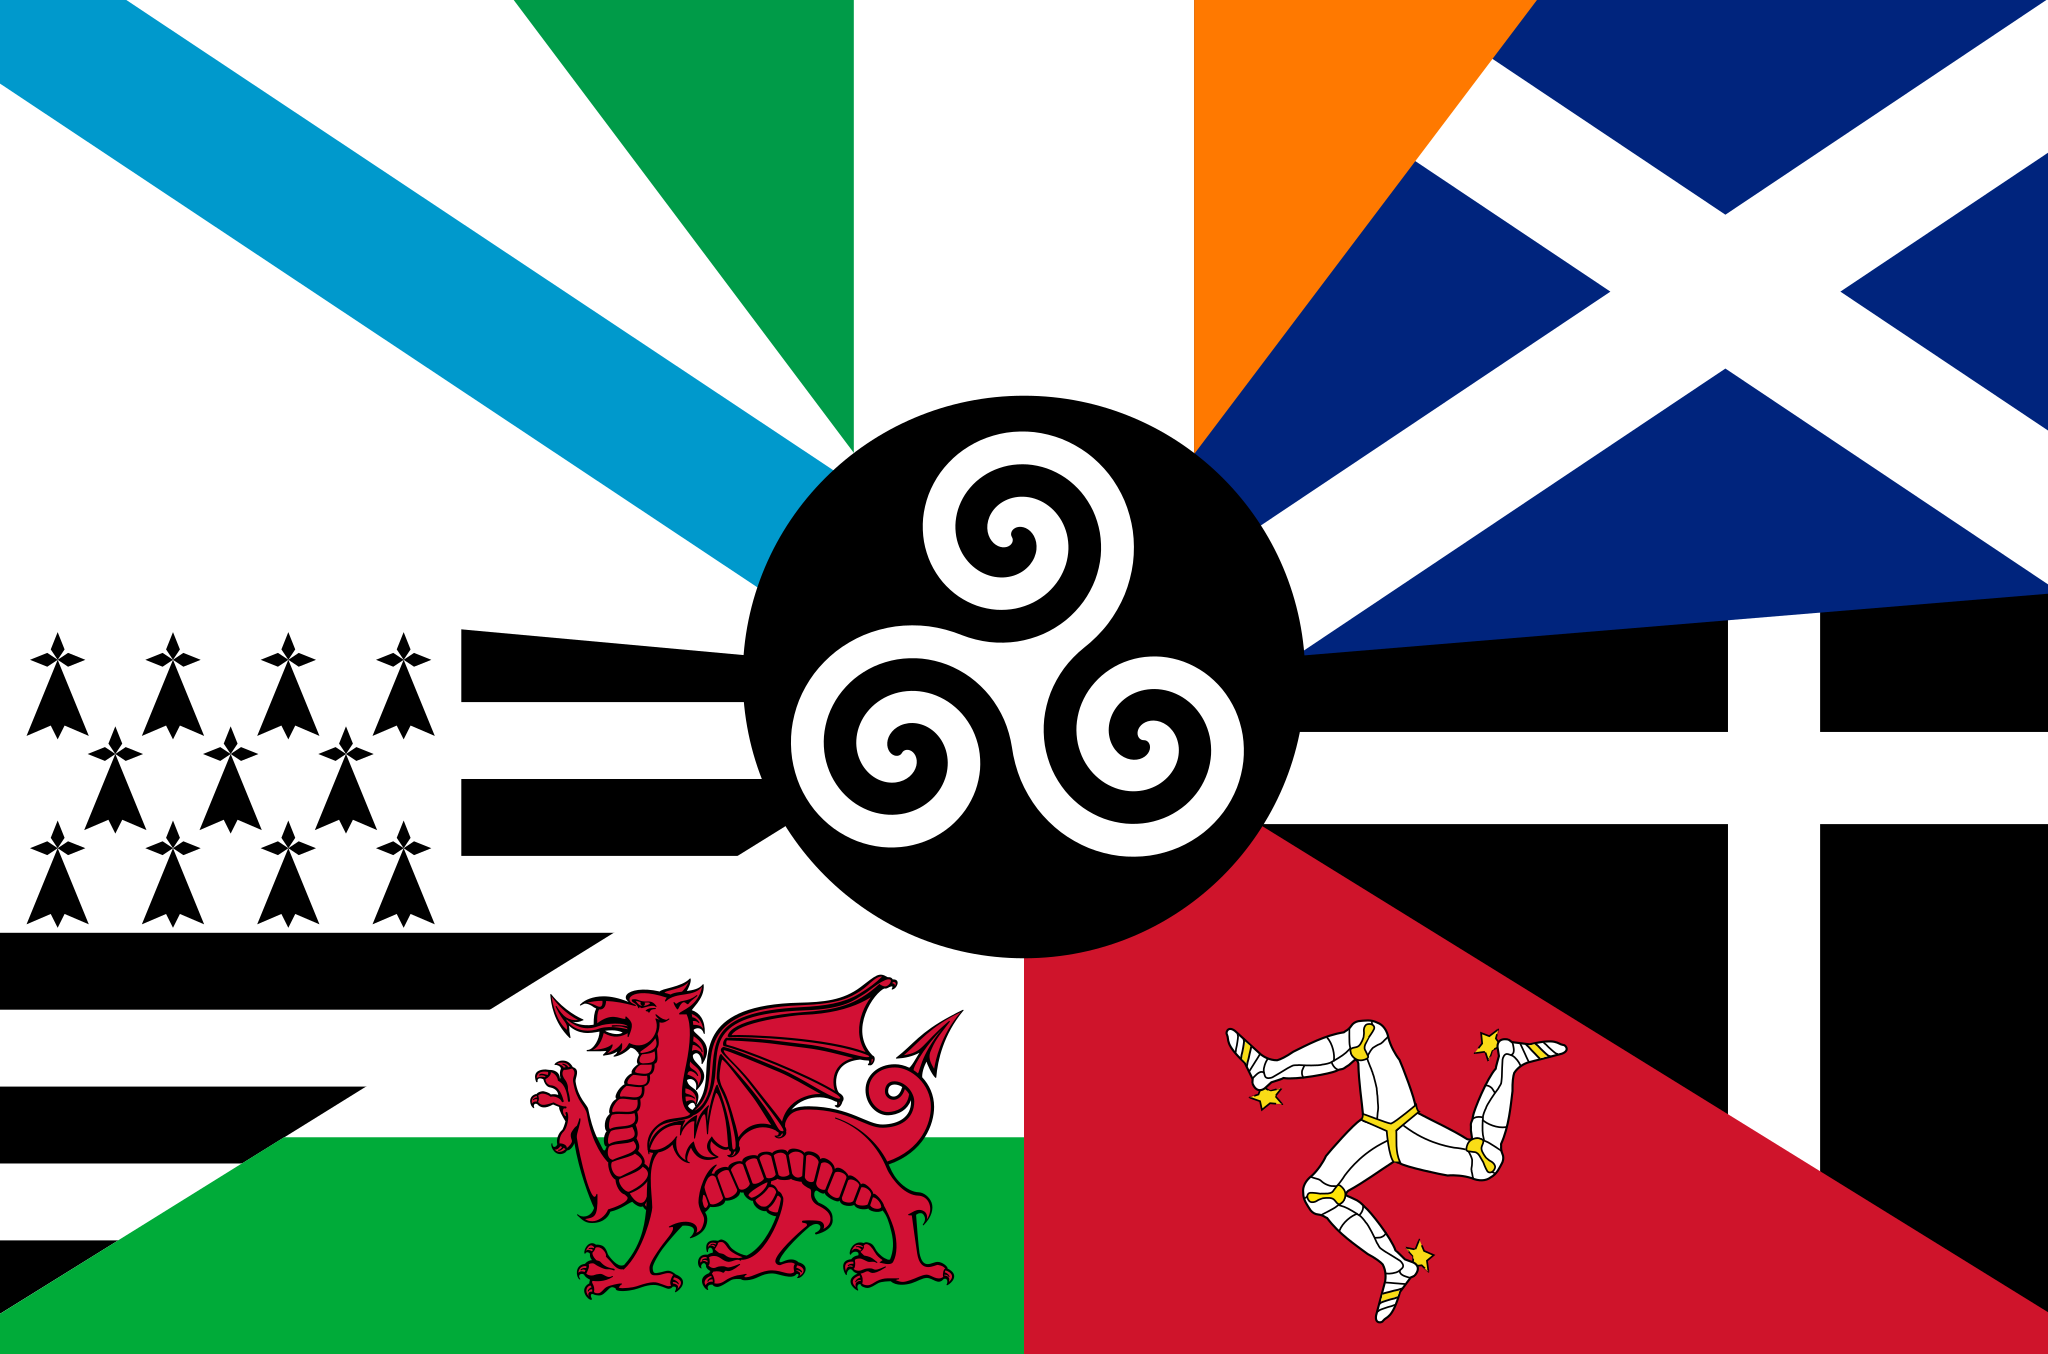 Celtic flags